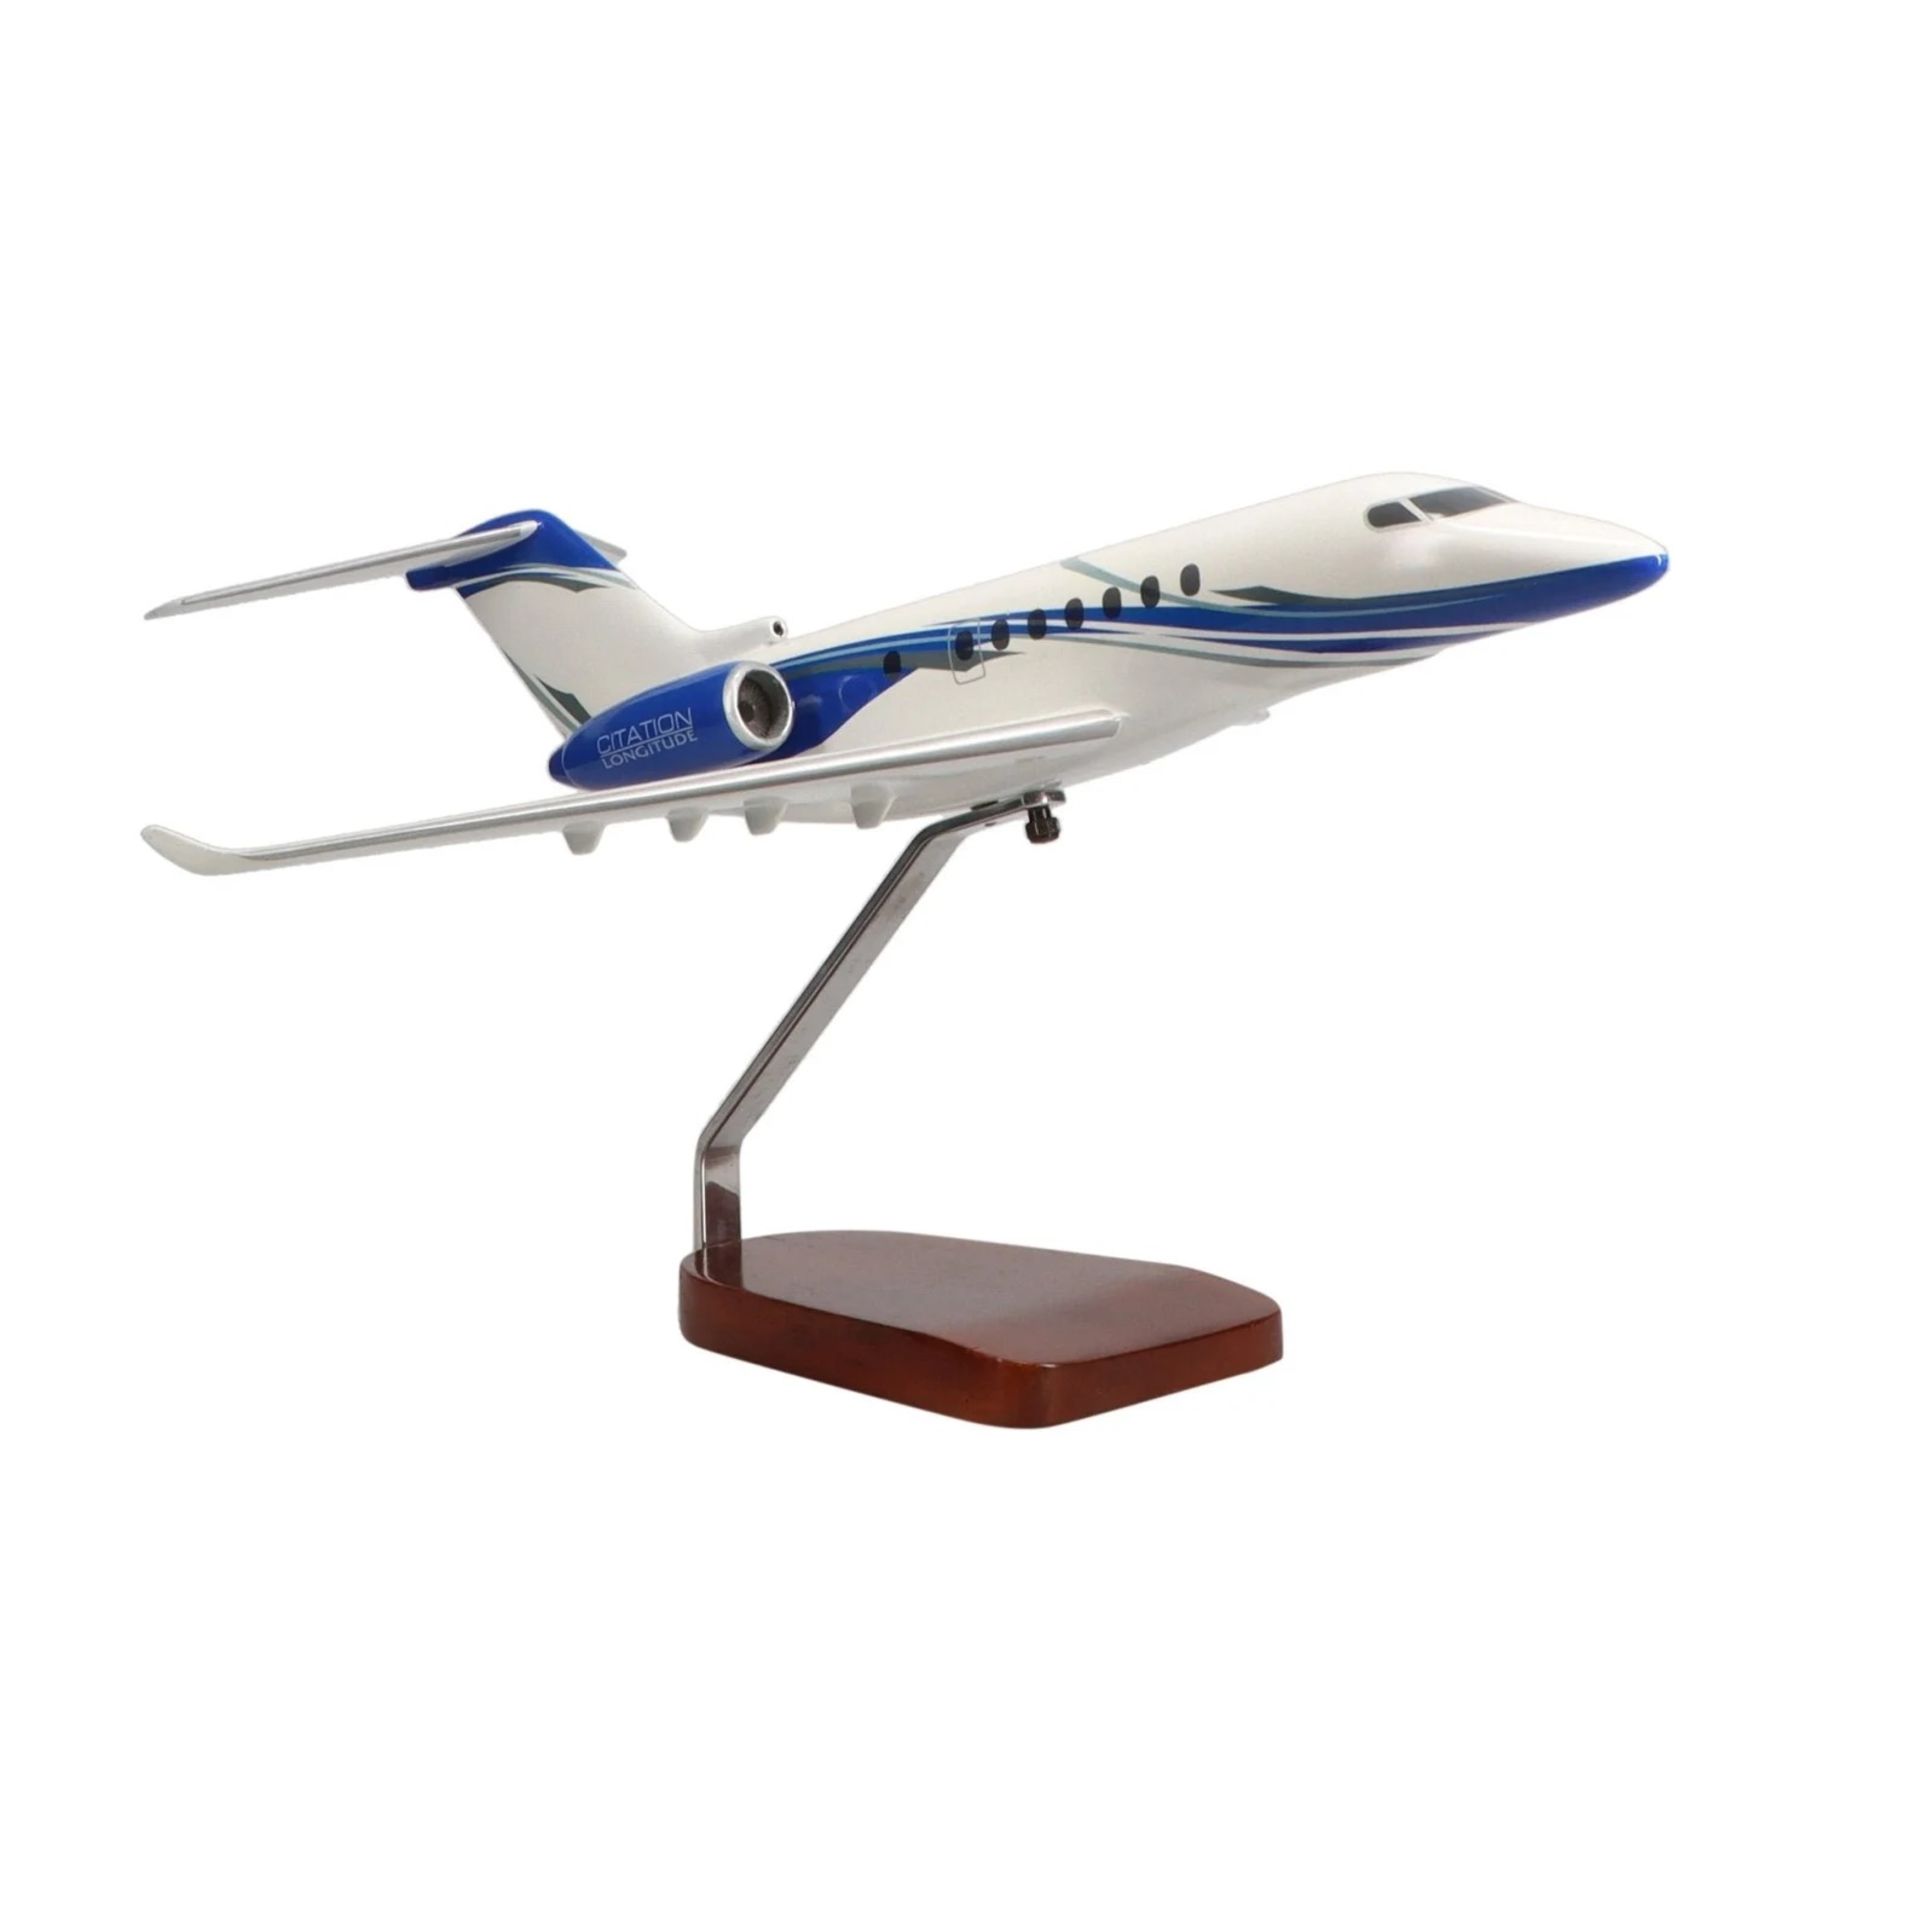 Cessna Citation Longitude Wooden Scale Model Desk Display